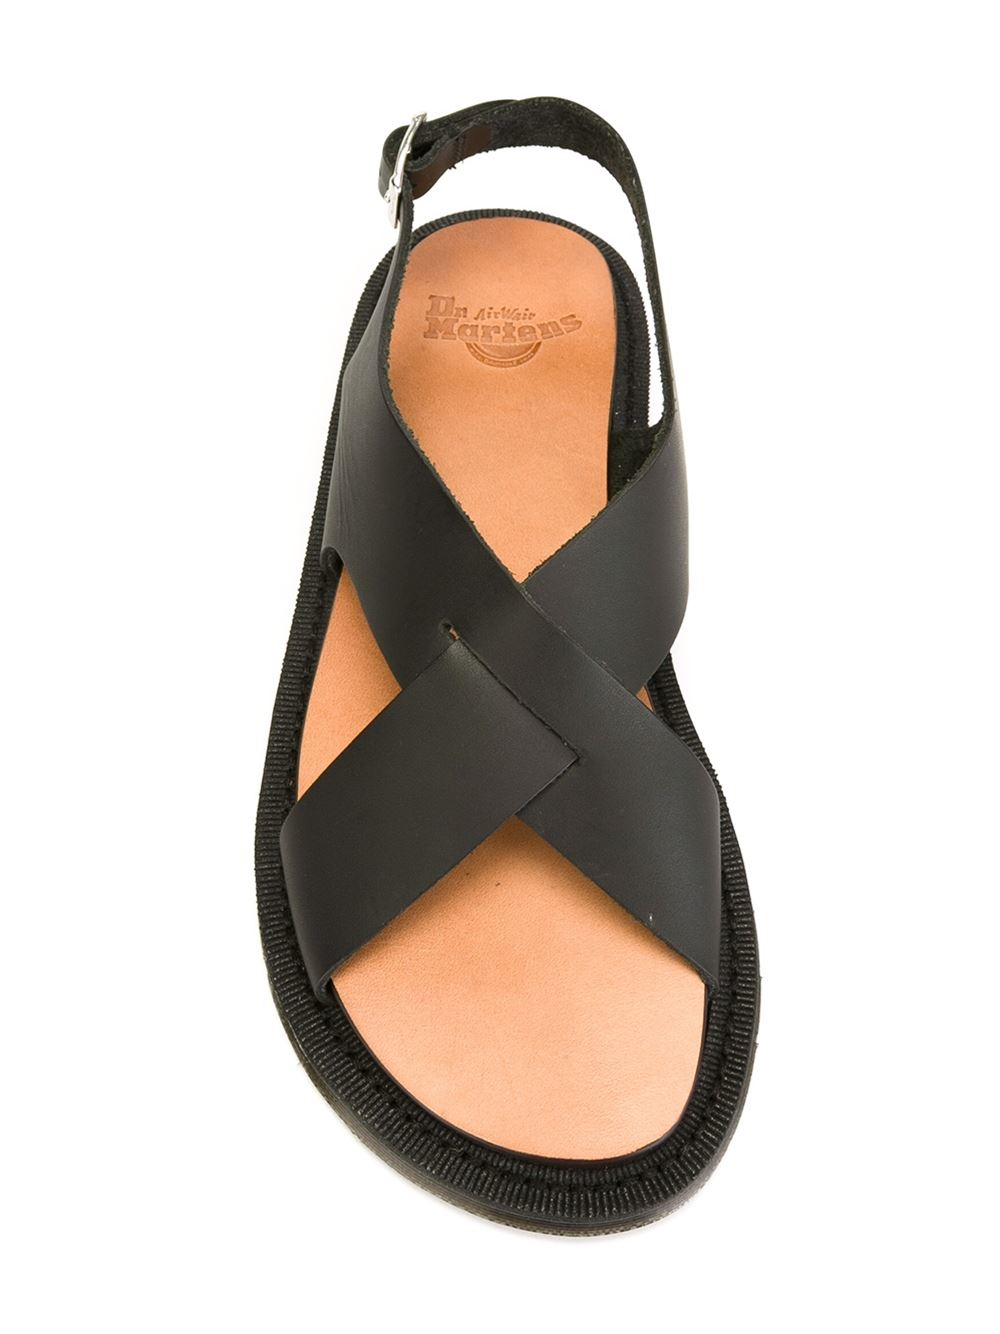 Dr. Martens Leather 'abella' Sandals in Black - Lyst